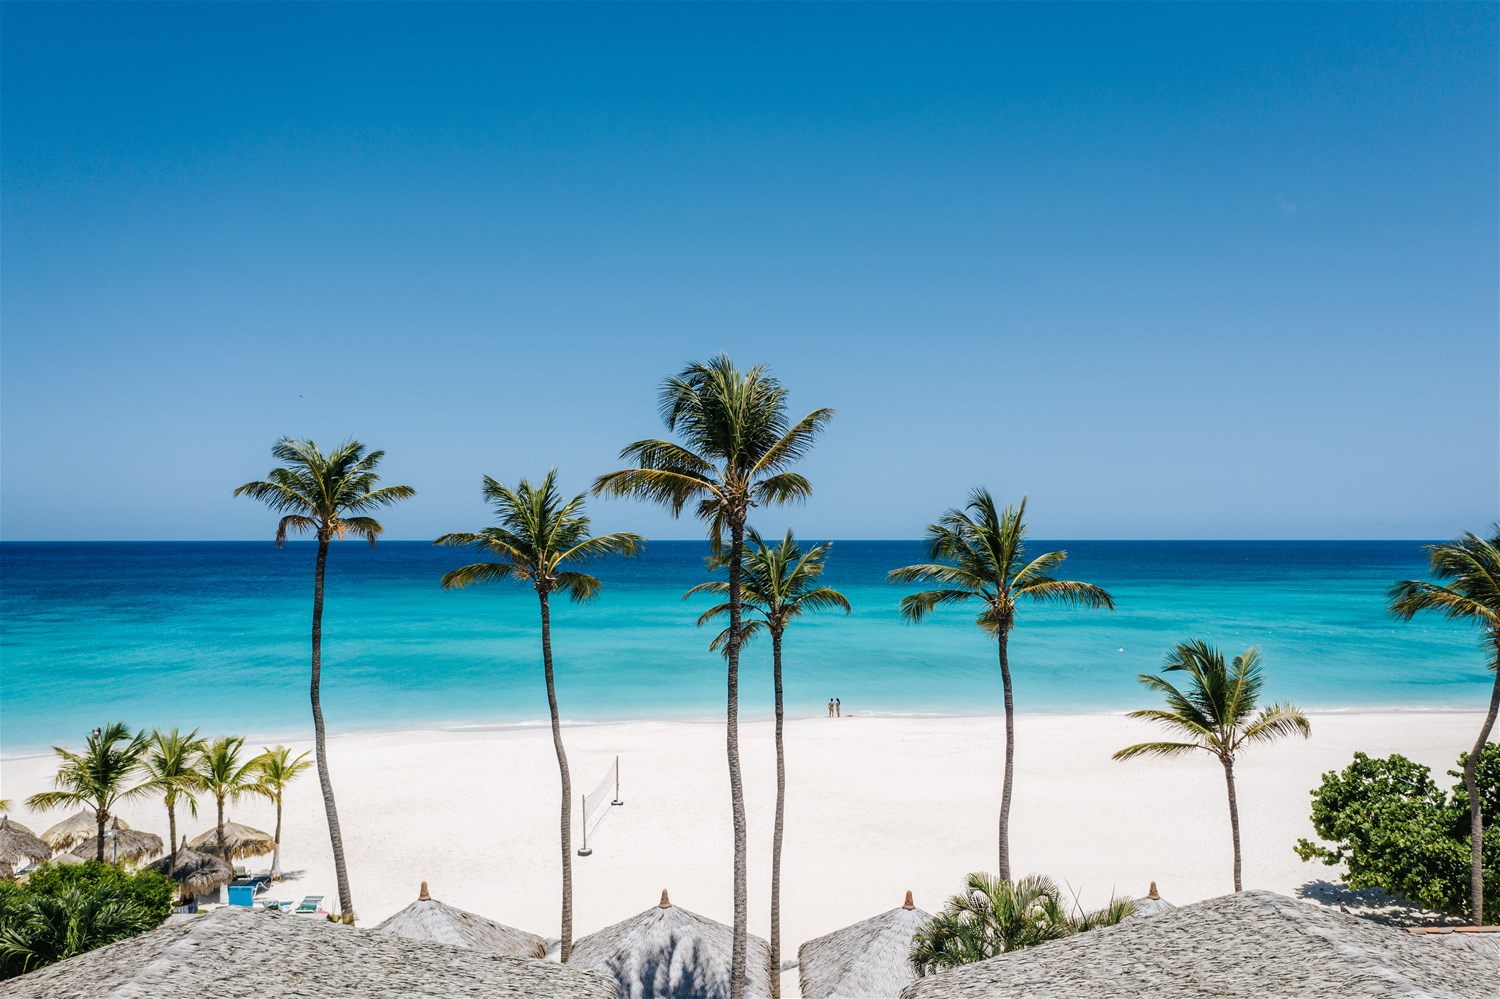 Why Should You Visit Aruba?